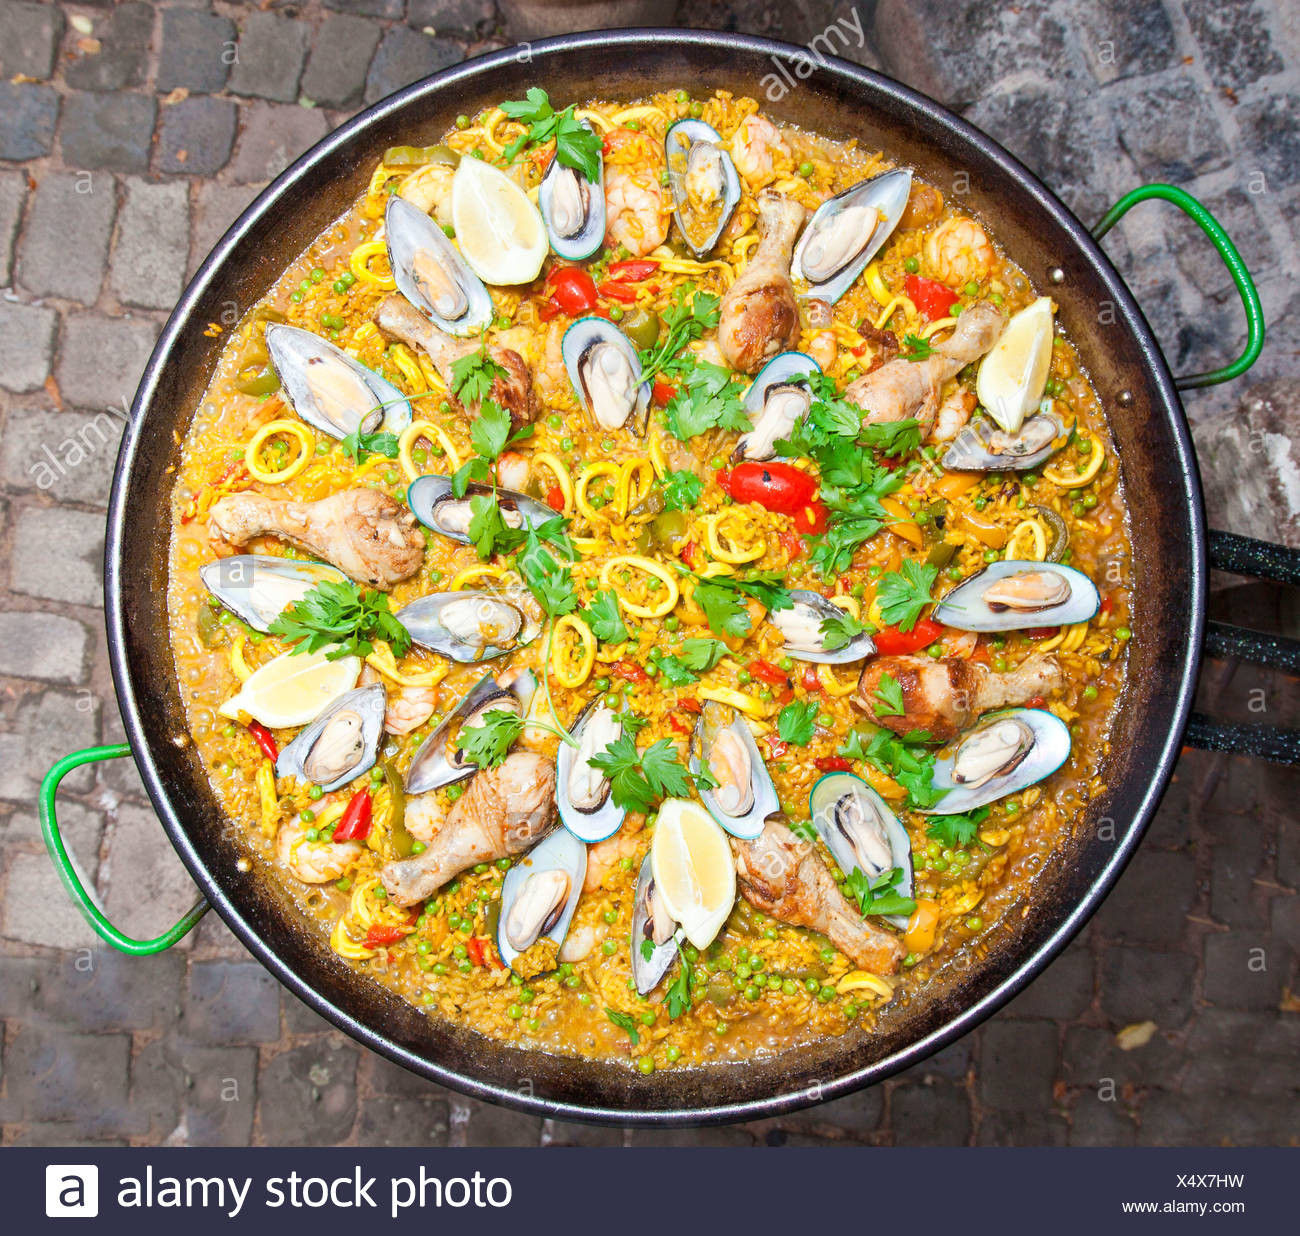 Spanish Rice Dish With Seafood
 Paella a Spanish rice dish with seafood and chicken